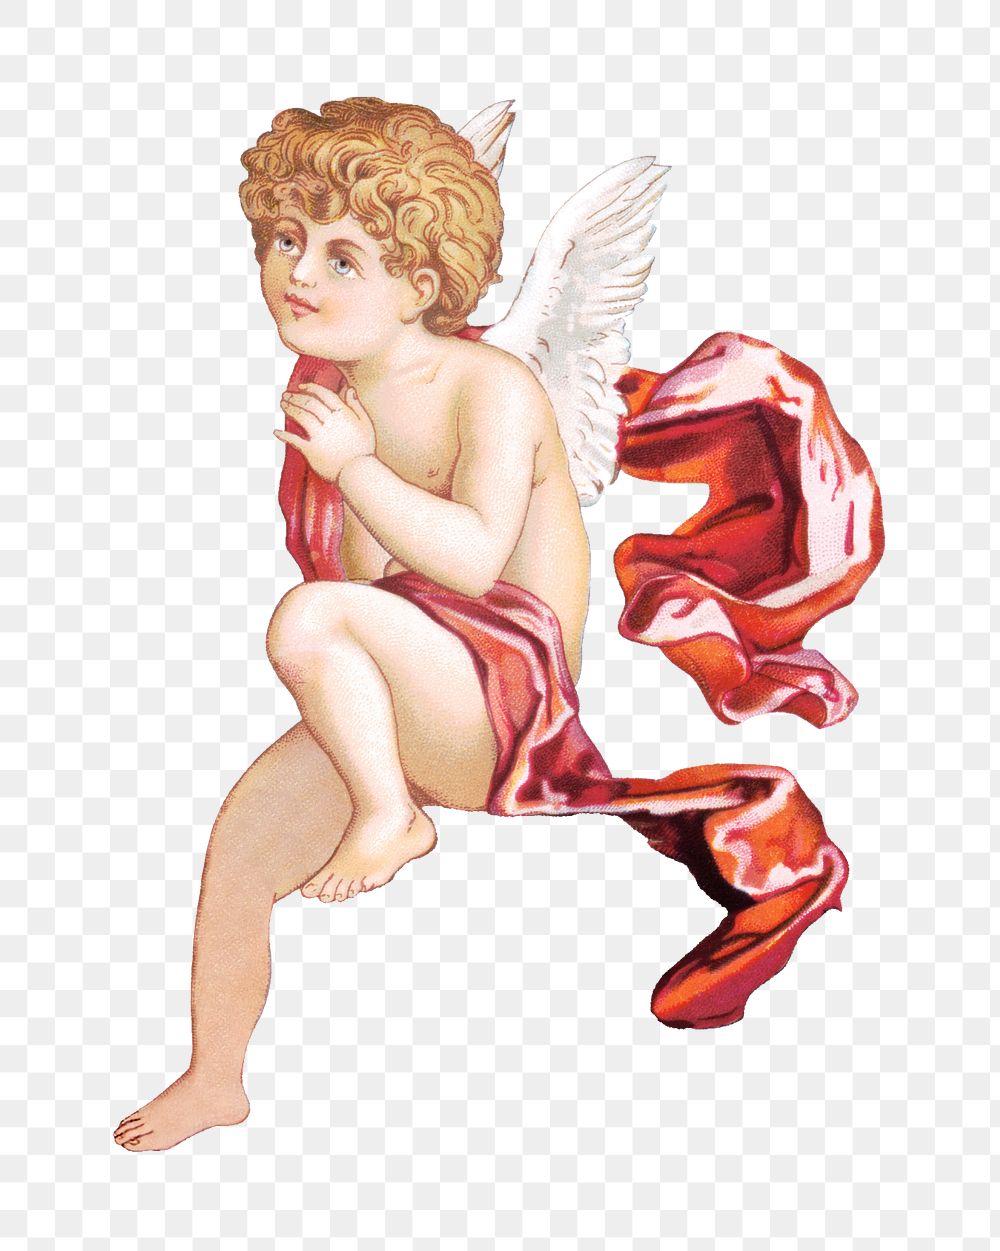 Sitting cherub png sticker, vintage illustration on transparent background.   Remastered by rawpixel